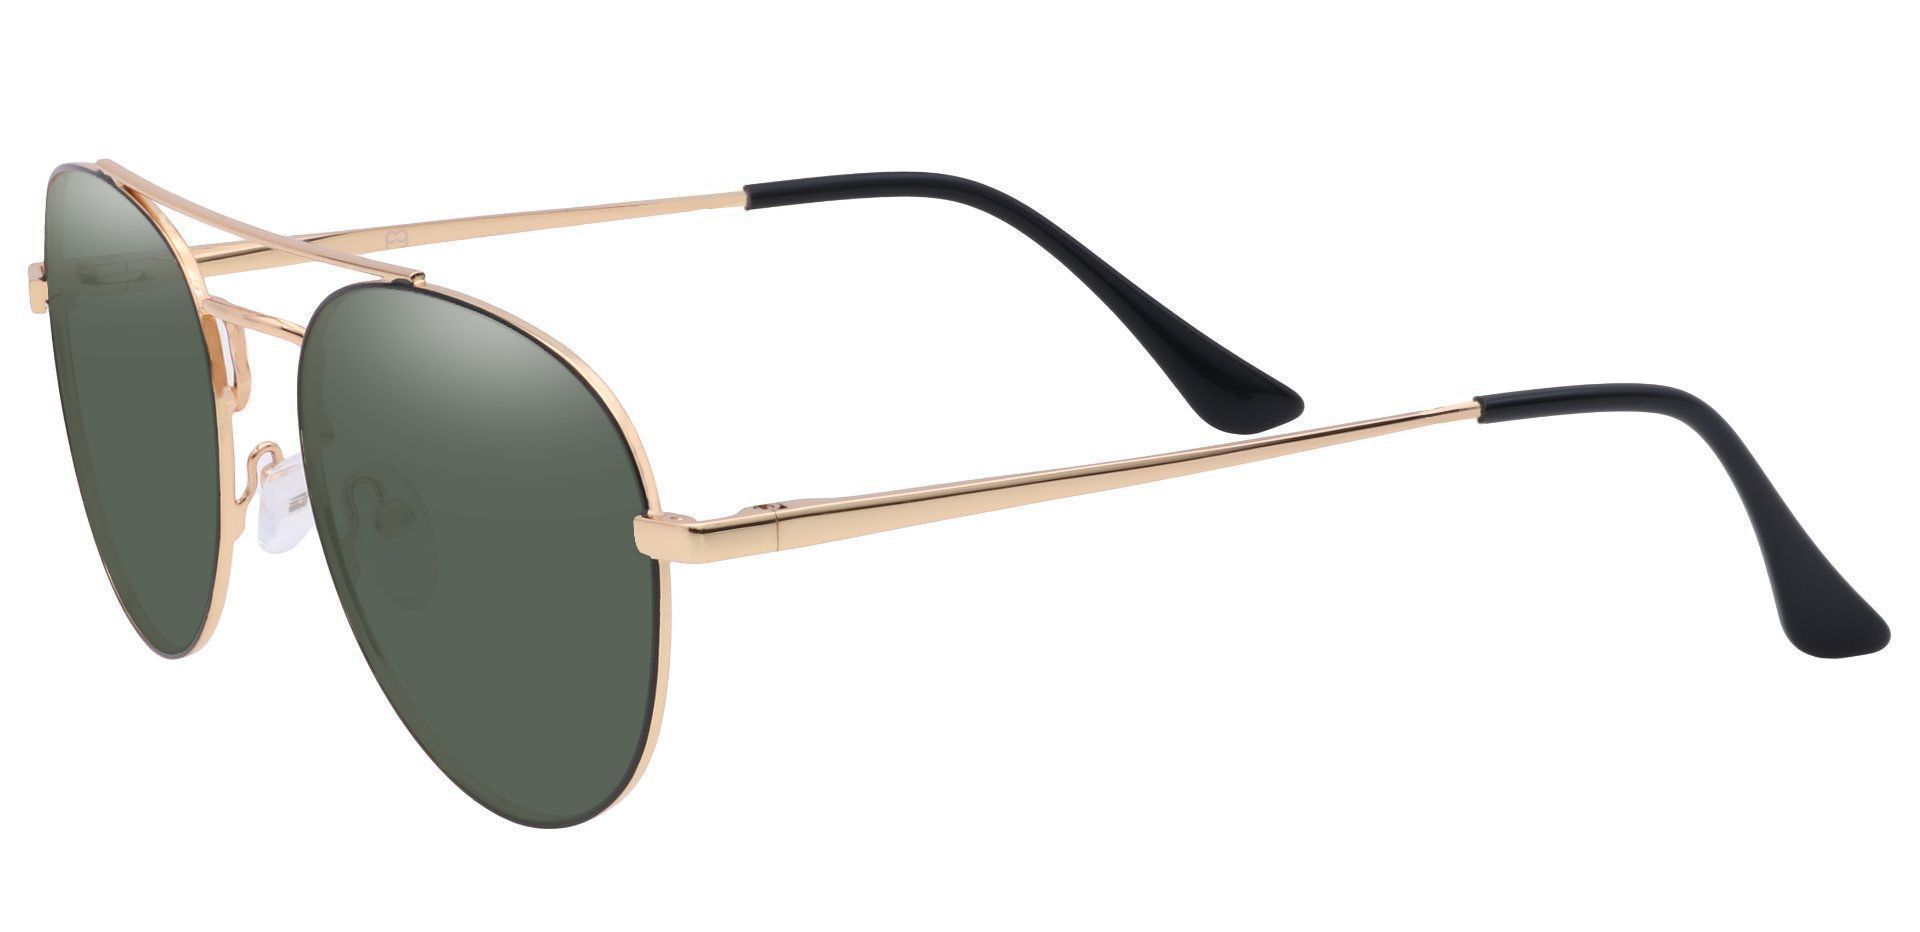 Trapp Aviator Progressive Sunglasses - Gold Frame With Green Lenses